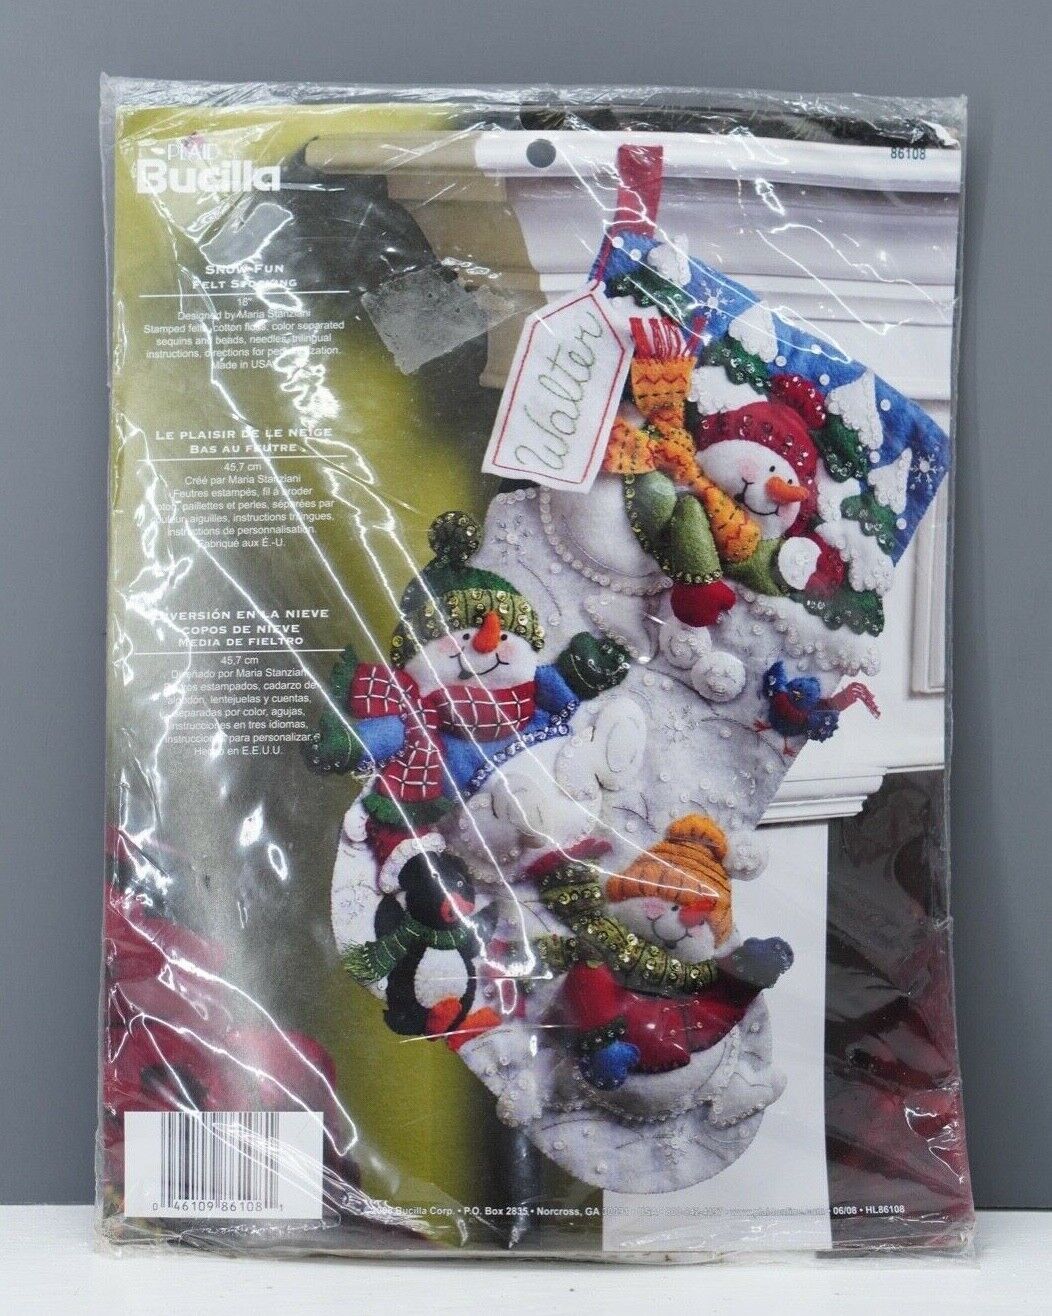 NEW Bucilla Plaid Embroidery & Felt Stocking Kit Snowman Sequins Christmas 86108 - $32.15